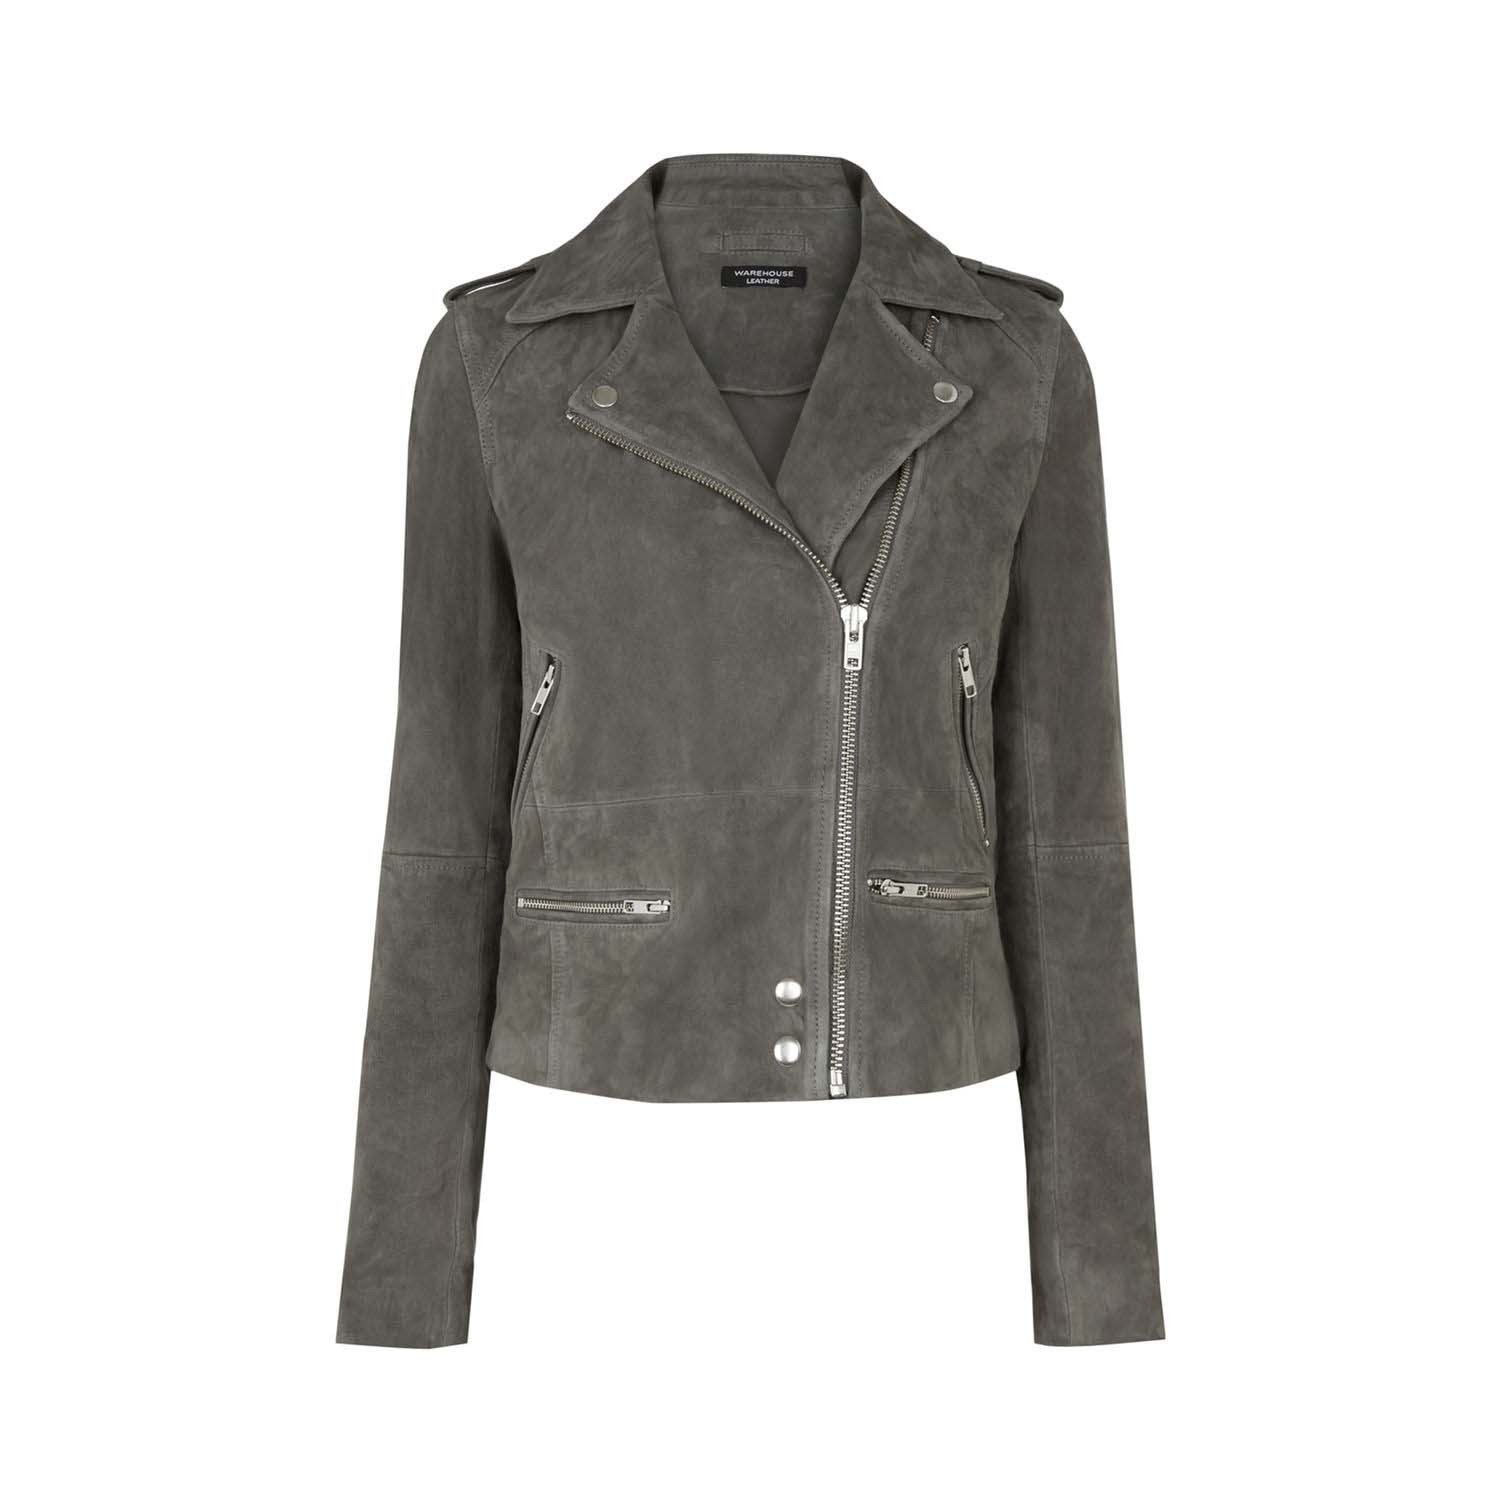 Warehouse Women's Suede Biker Jacket in Dark Grey 100% leather